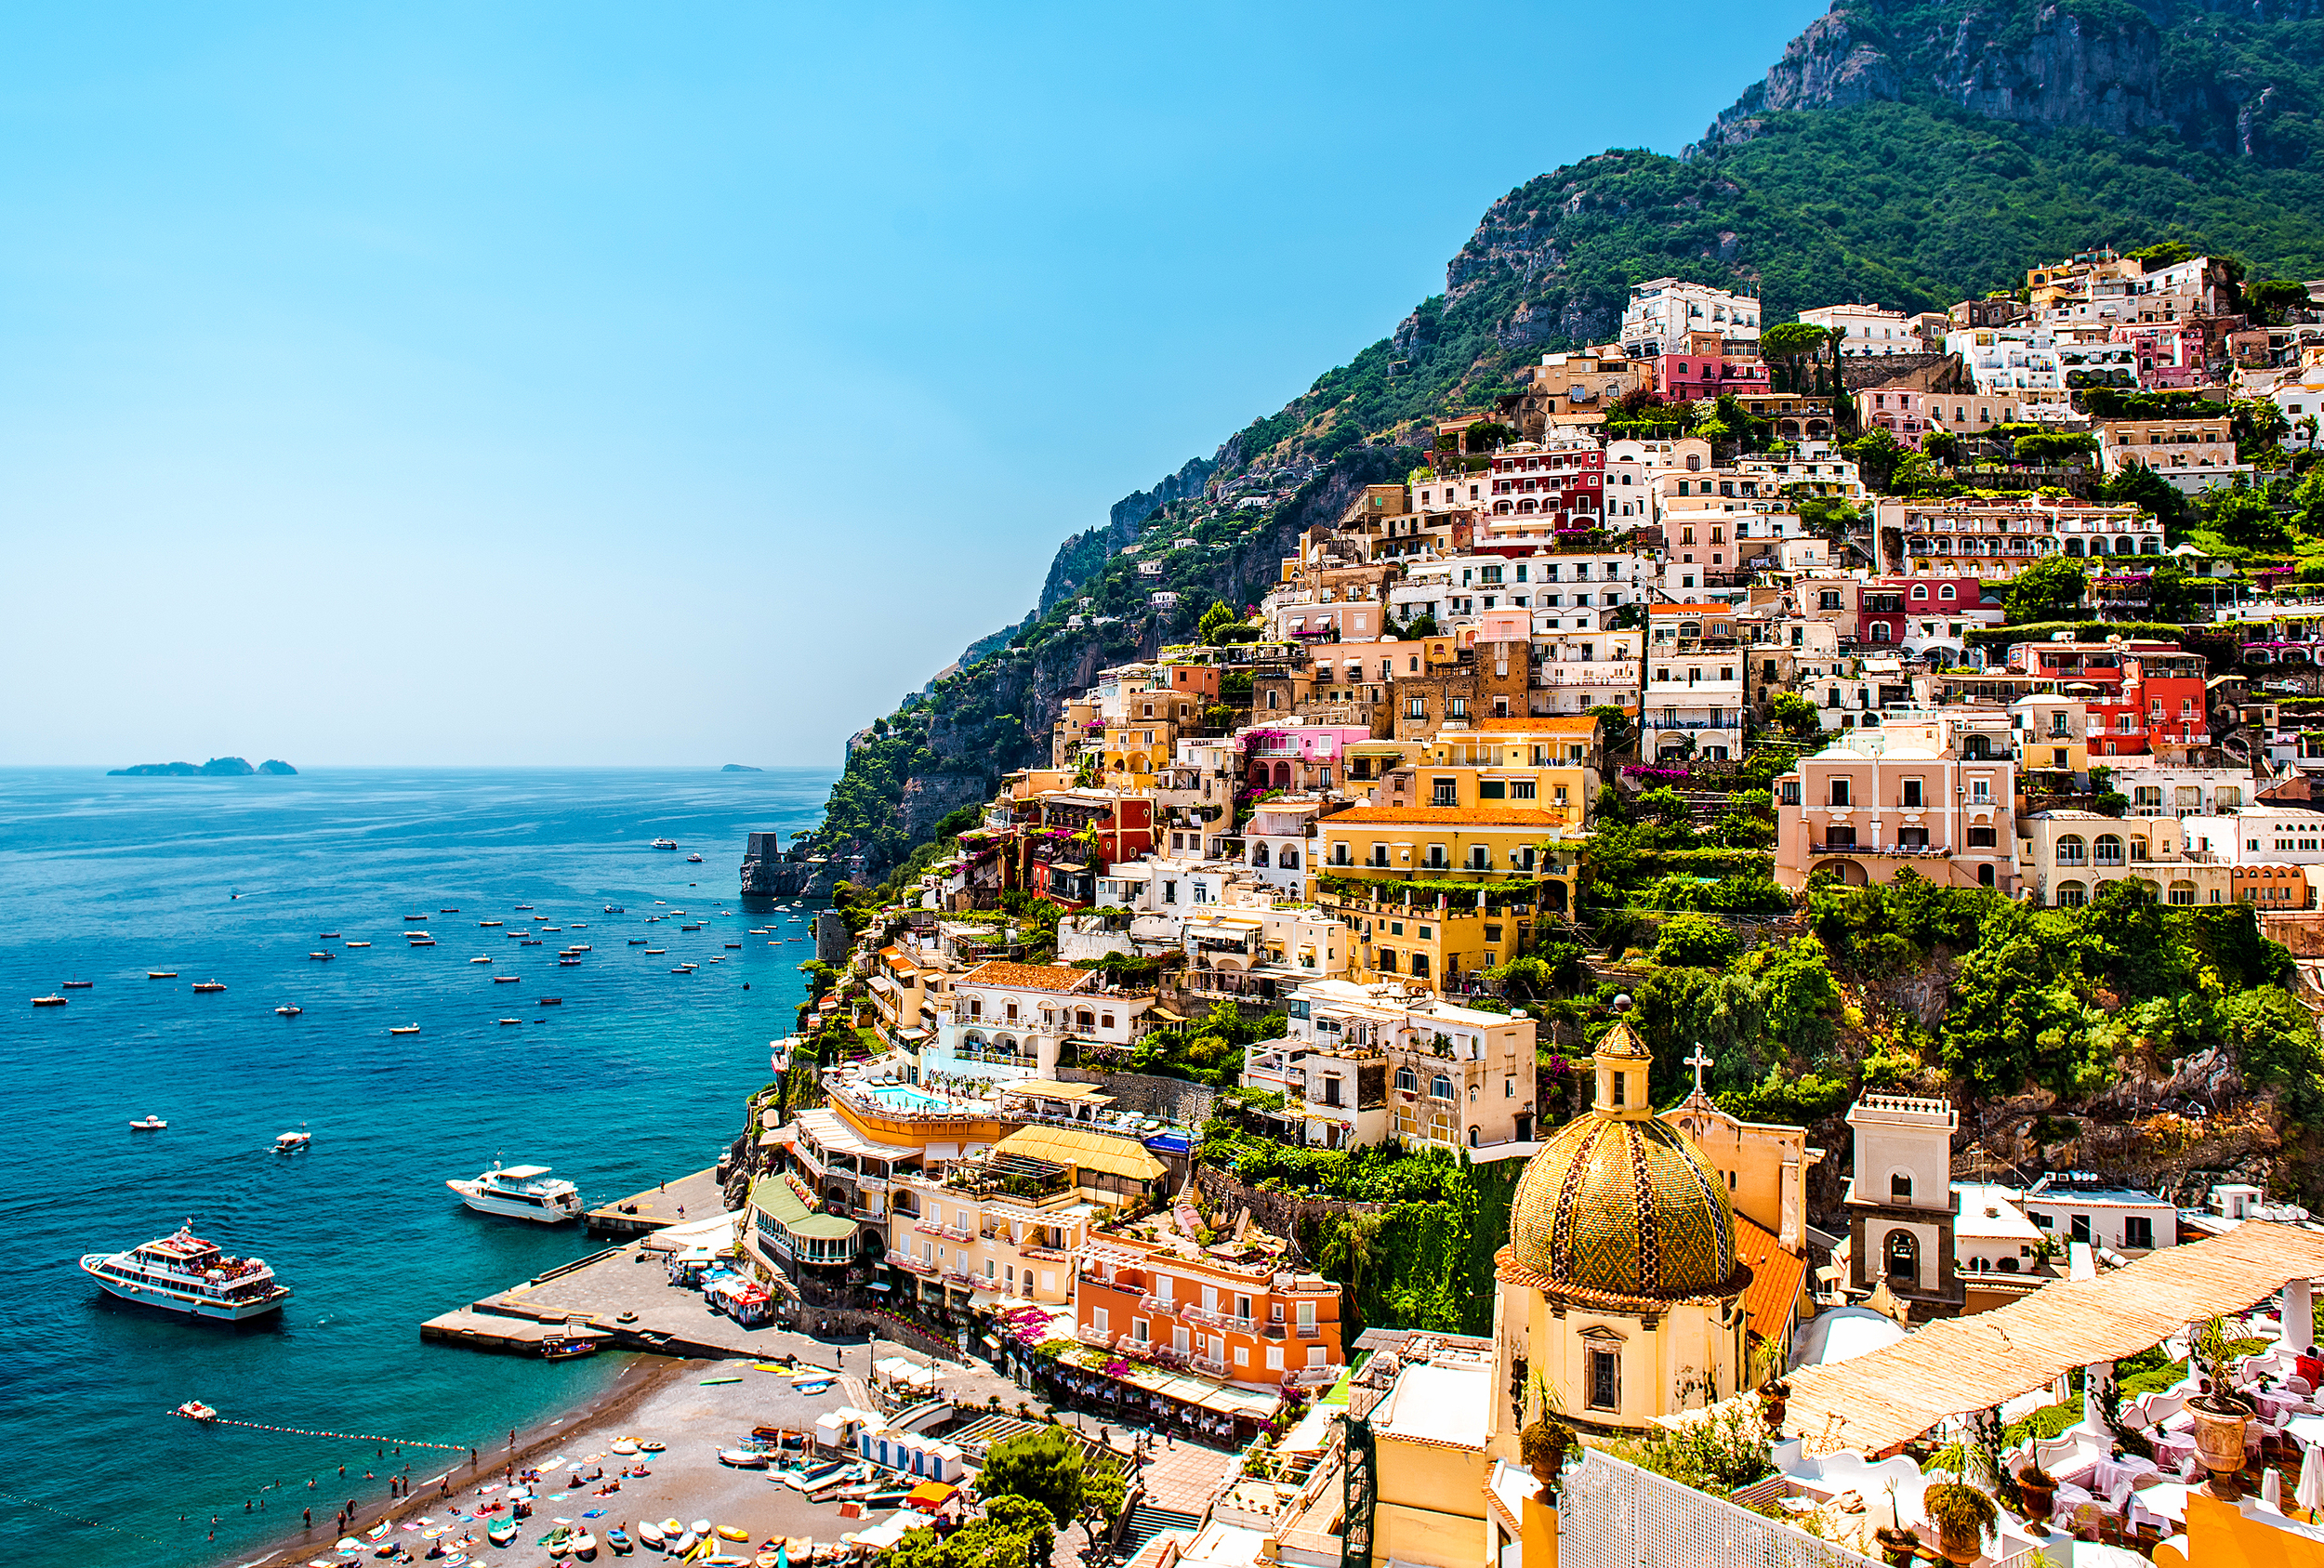 Let at ske Vær tilfreds cilia 5 Most Beautiful Sailing Spots on the Amalfi Coast